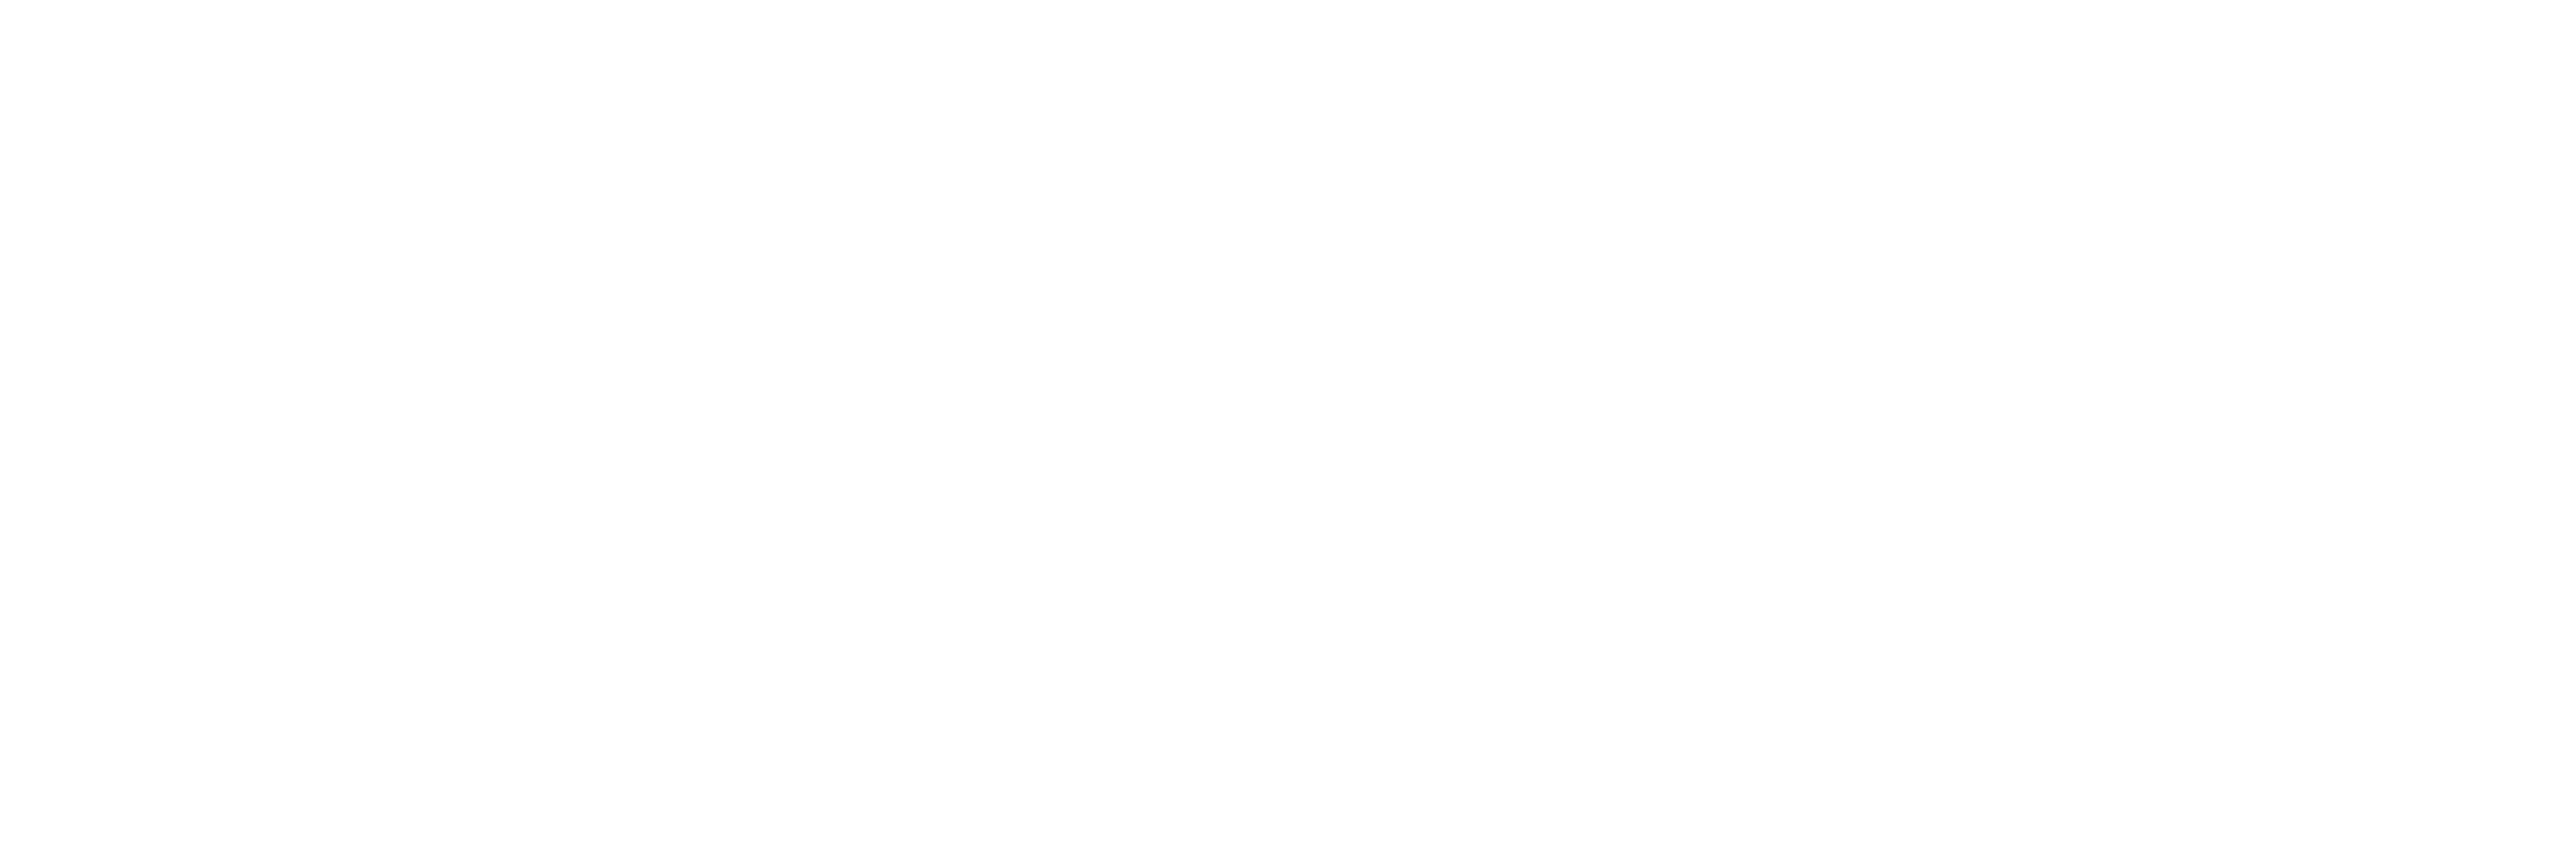 sandali-heading-hr.png